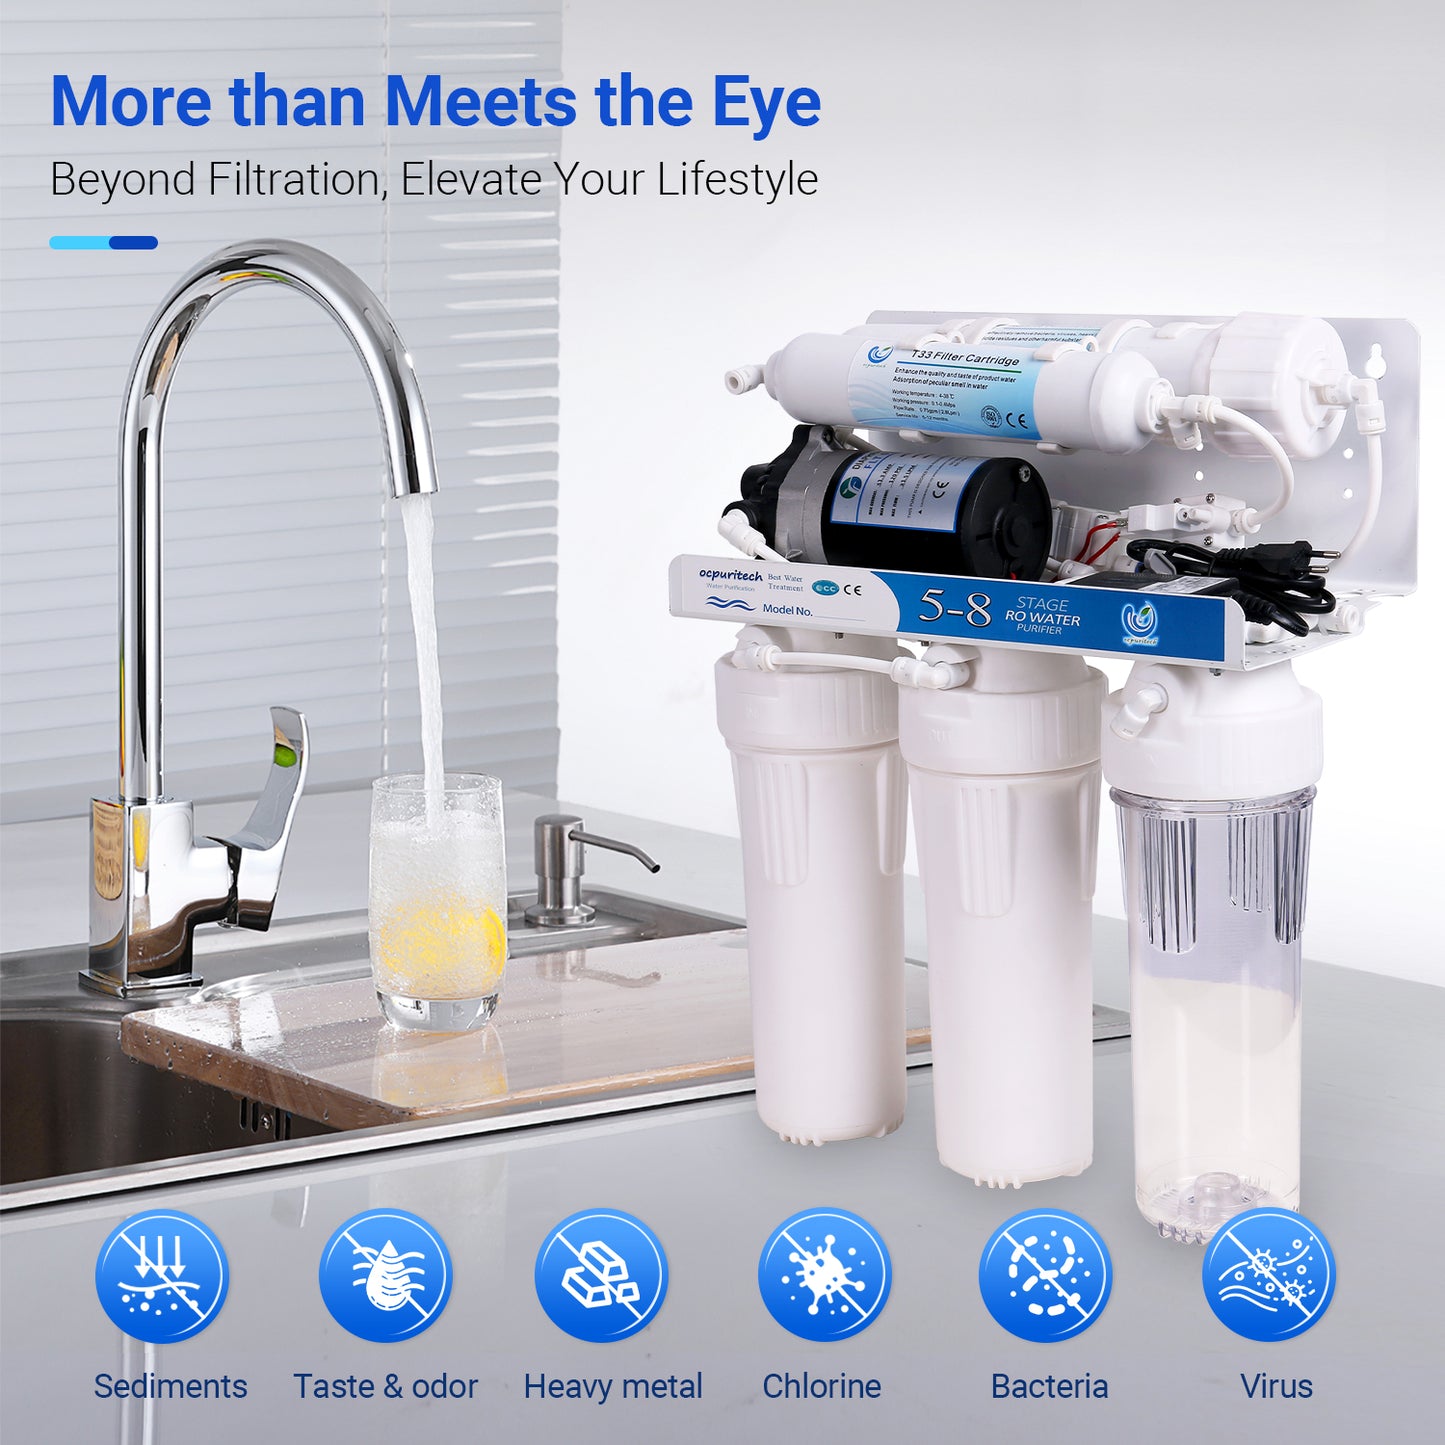 Ocpuritech Under Sink Water Filter System for Healthier Water